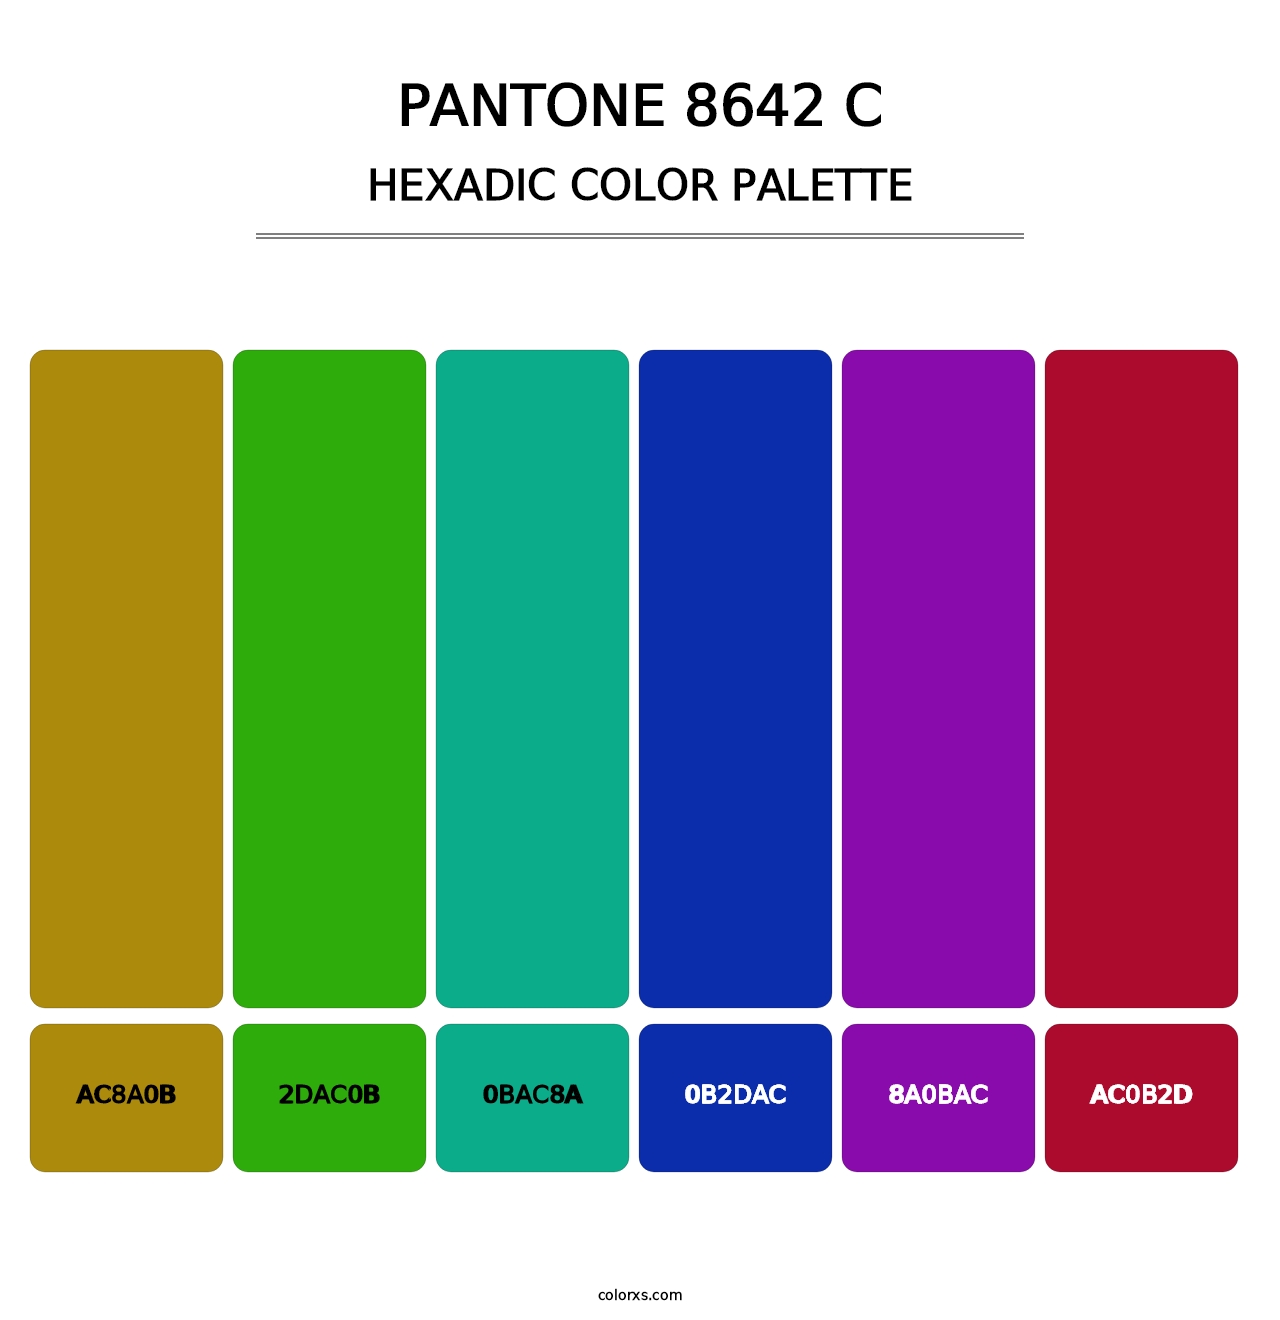 PANTONE 8642 C - Hexadic Color Palette